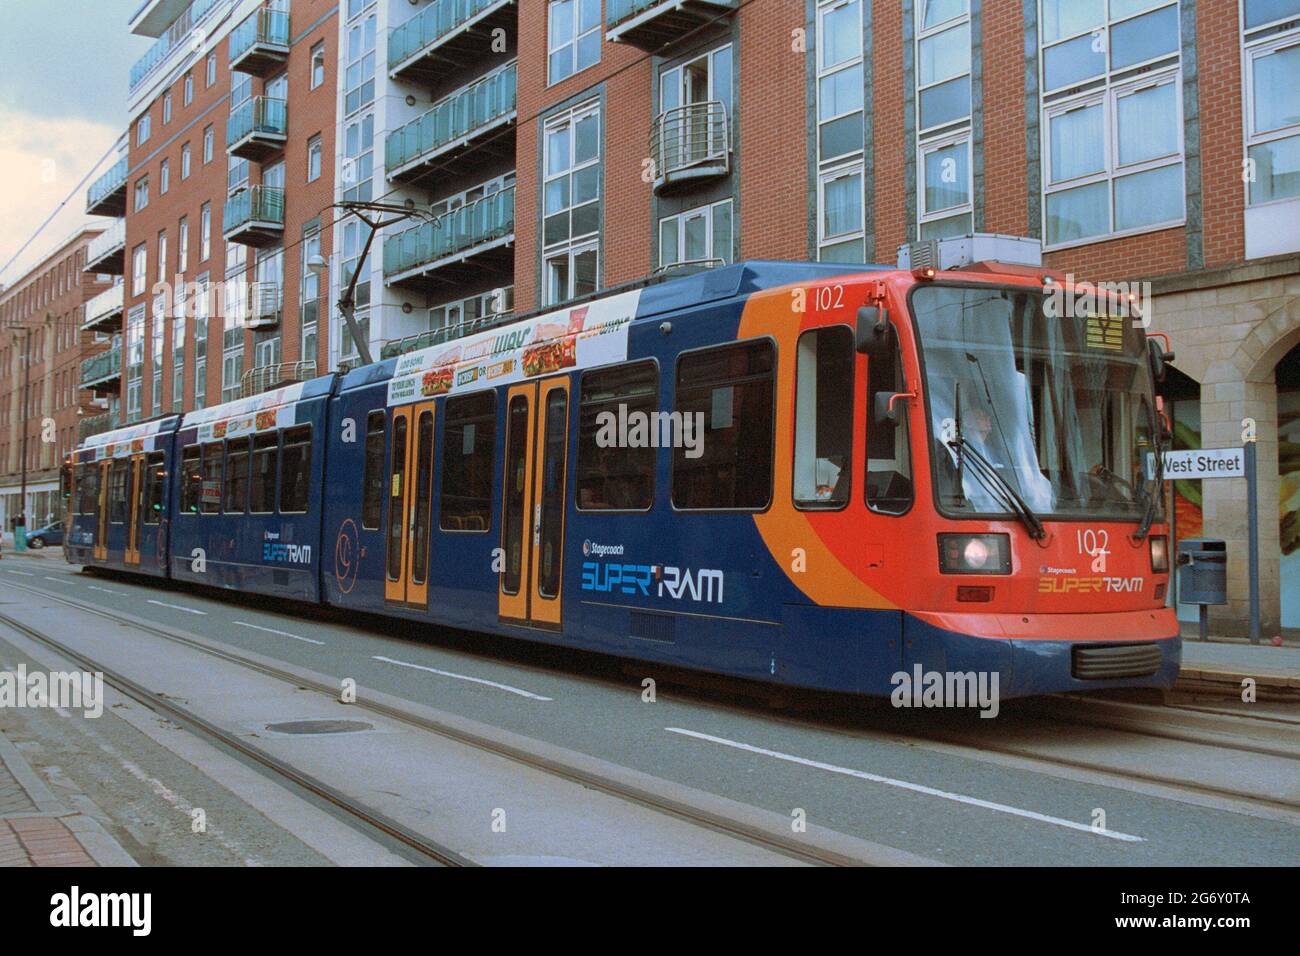 Sheffield, UK - 22 May 2021: A tram on the street. Stock Photo